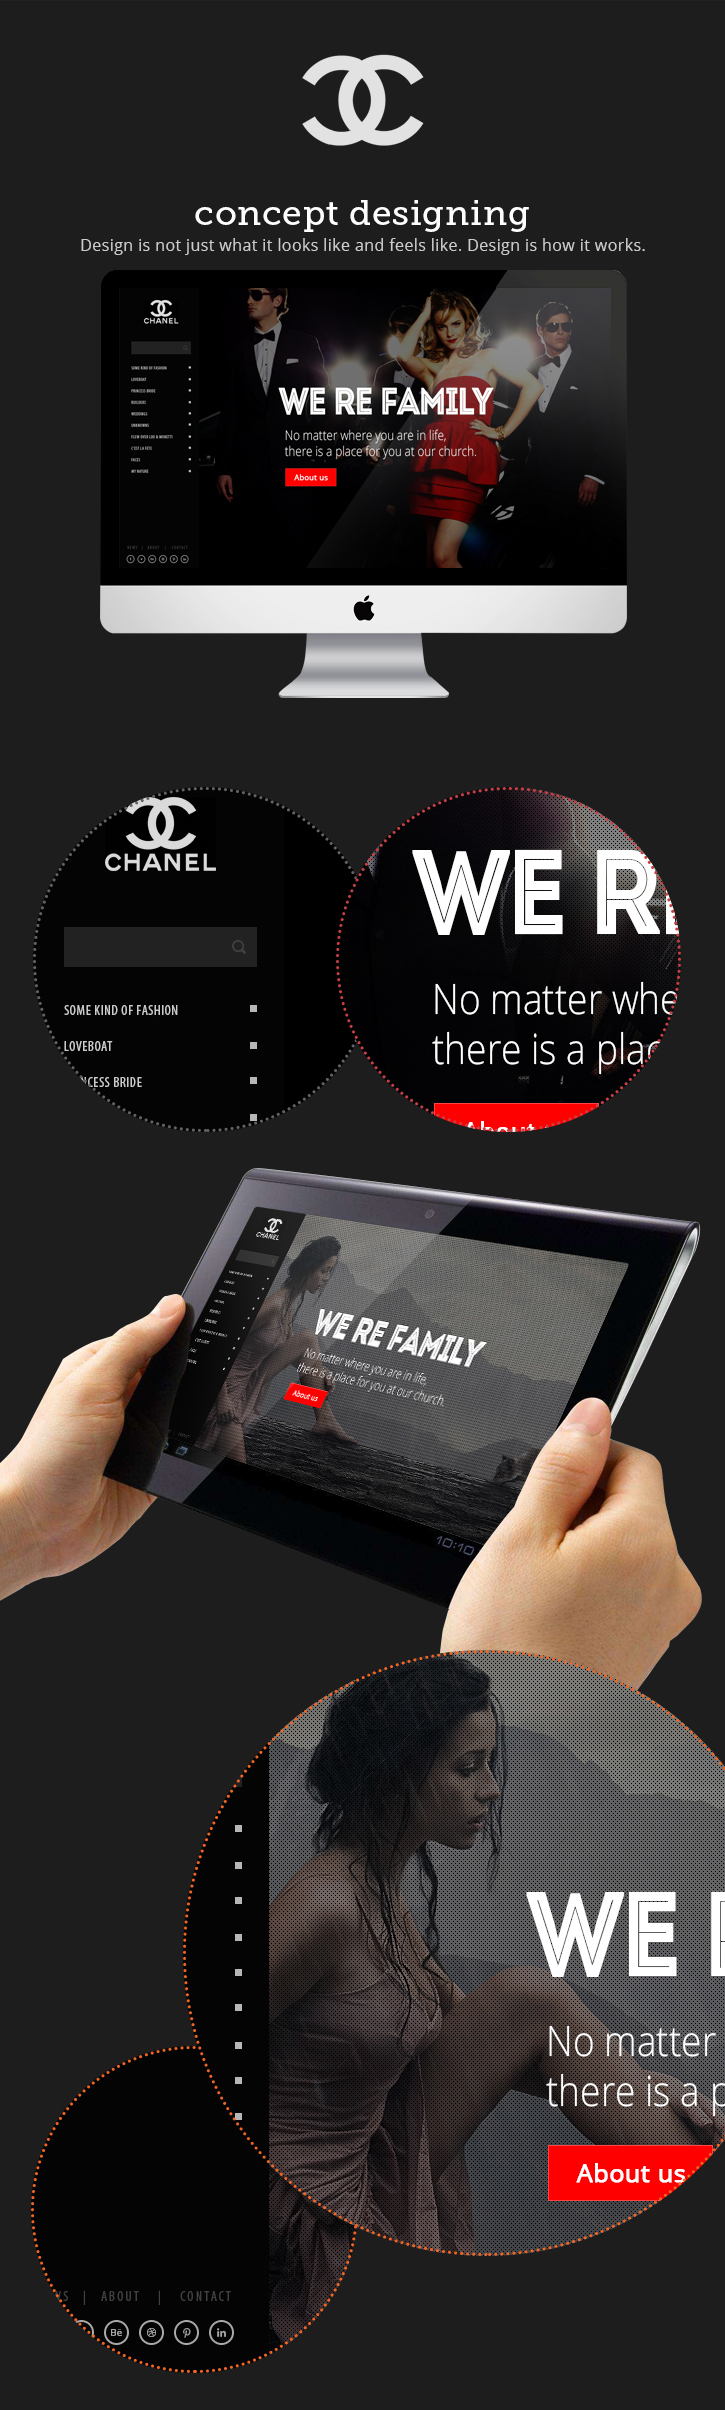 Chanel Concept design on Behance